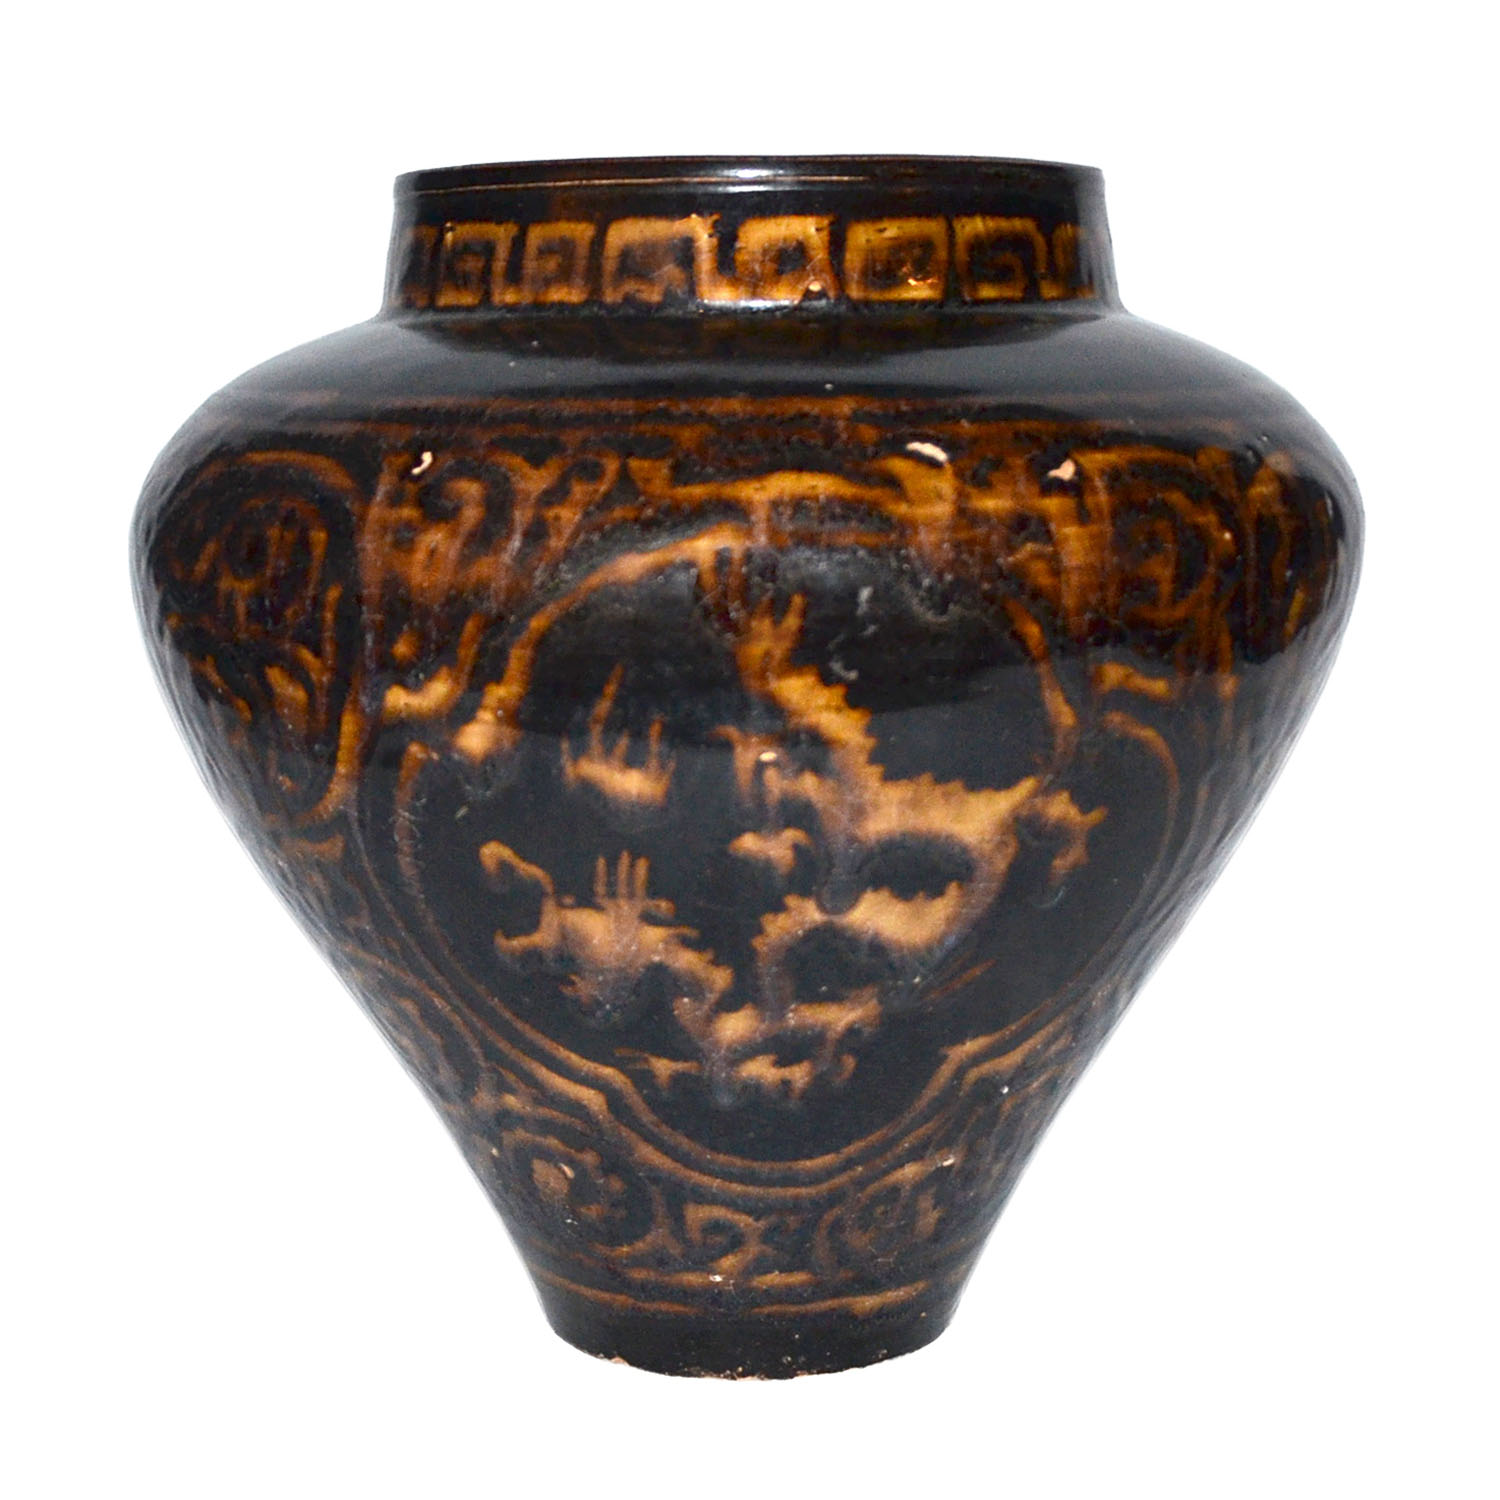 吉州窯黑釉醬彩開光龍紋花卉罐 A Jizhou Russet Painted Dark-Glazed Jar The tapering body is covered overall with a